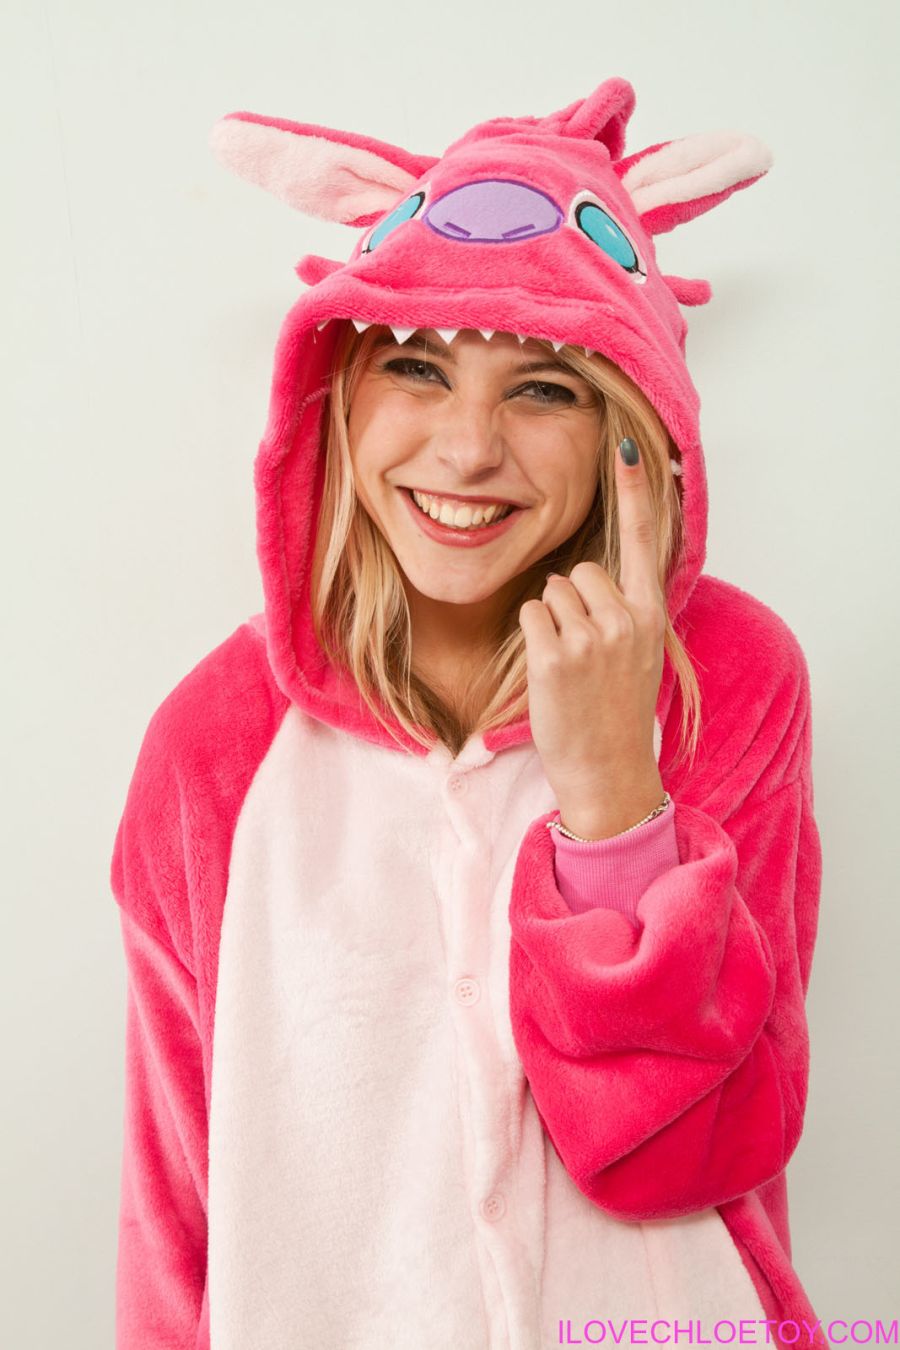 Chloe Toy als roze muppet en naakt